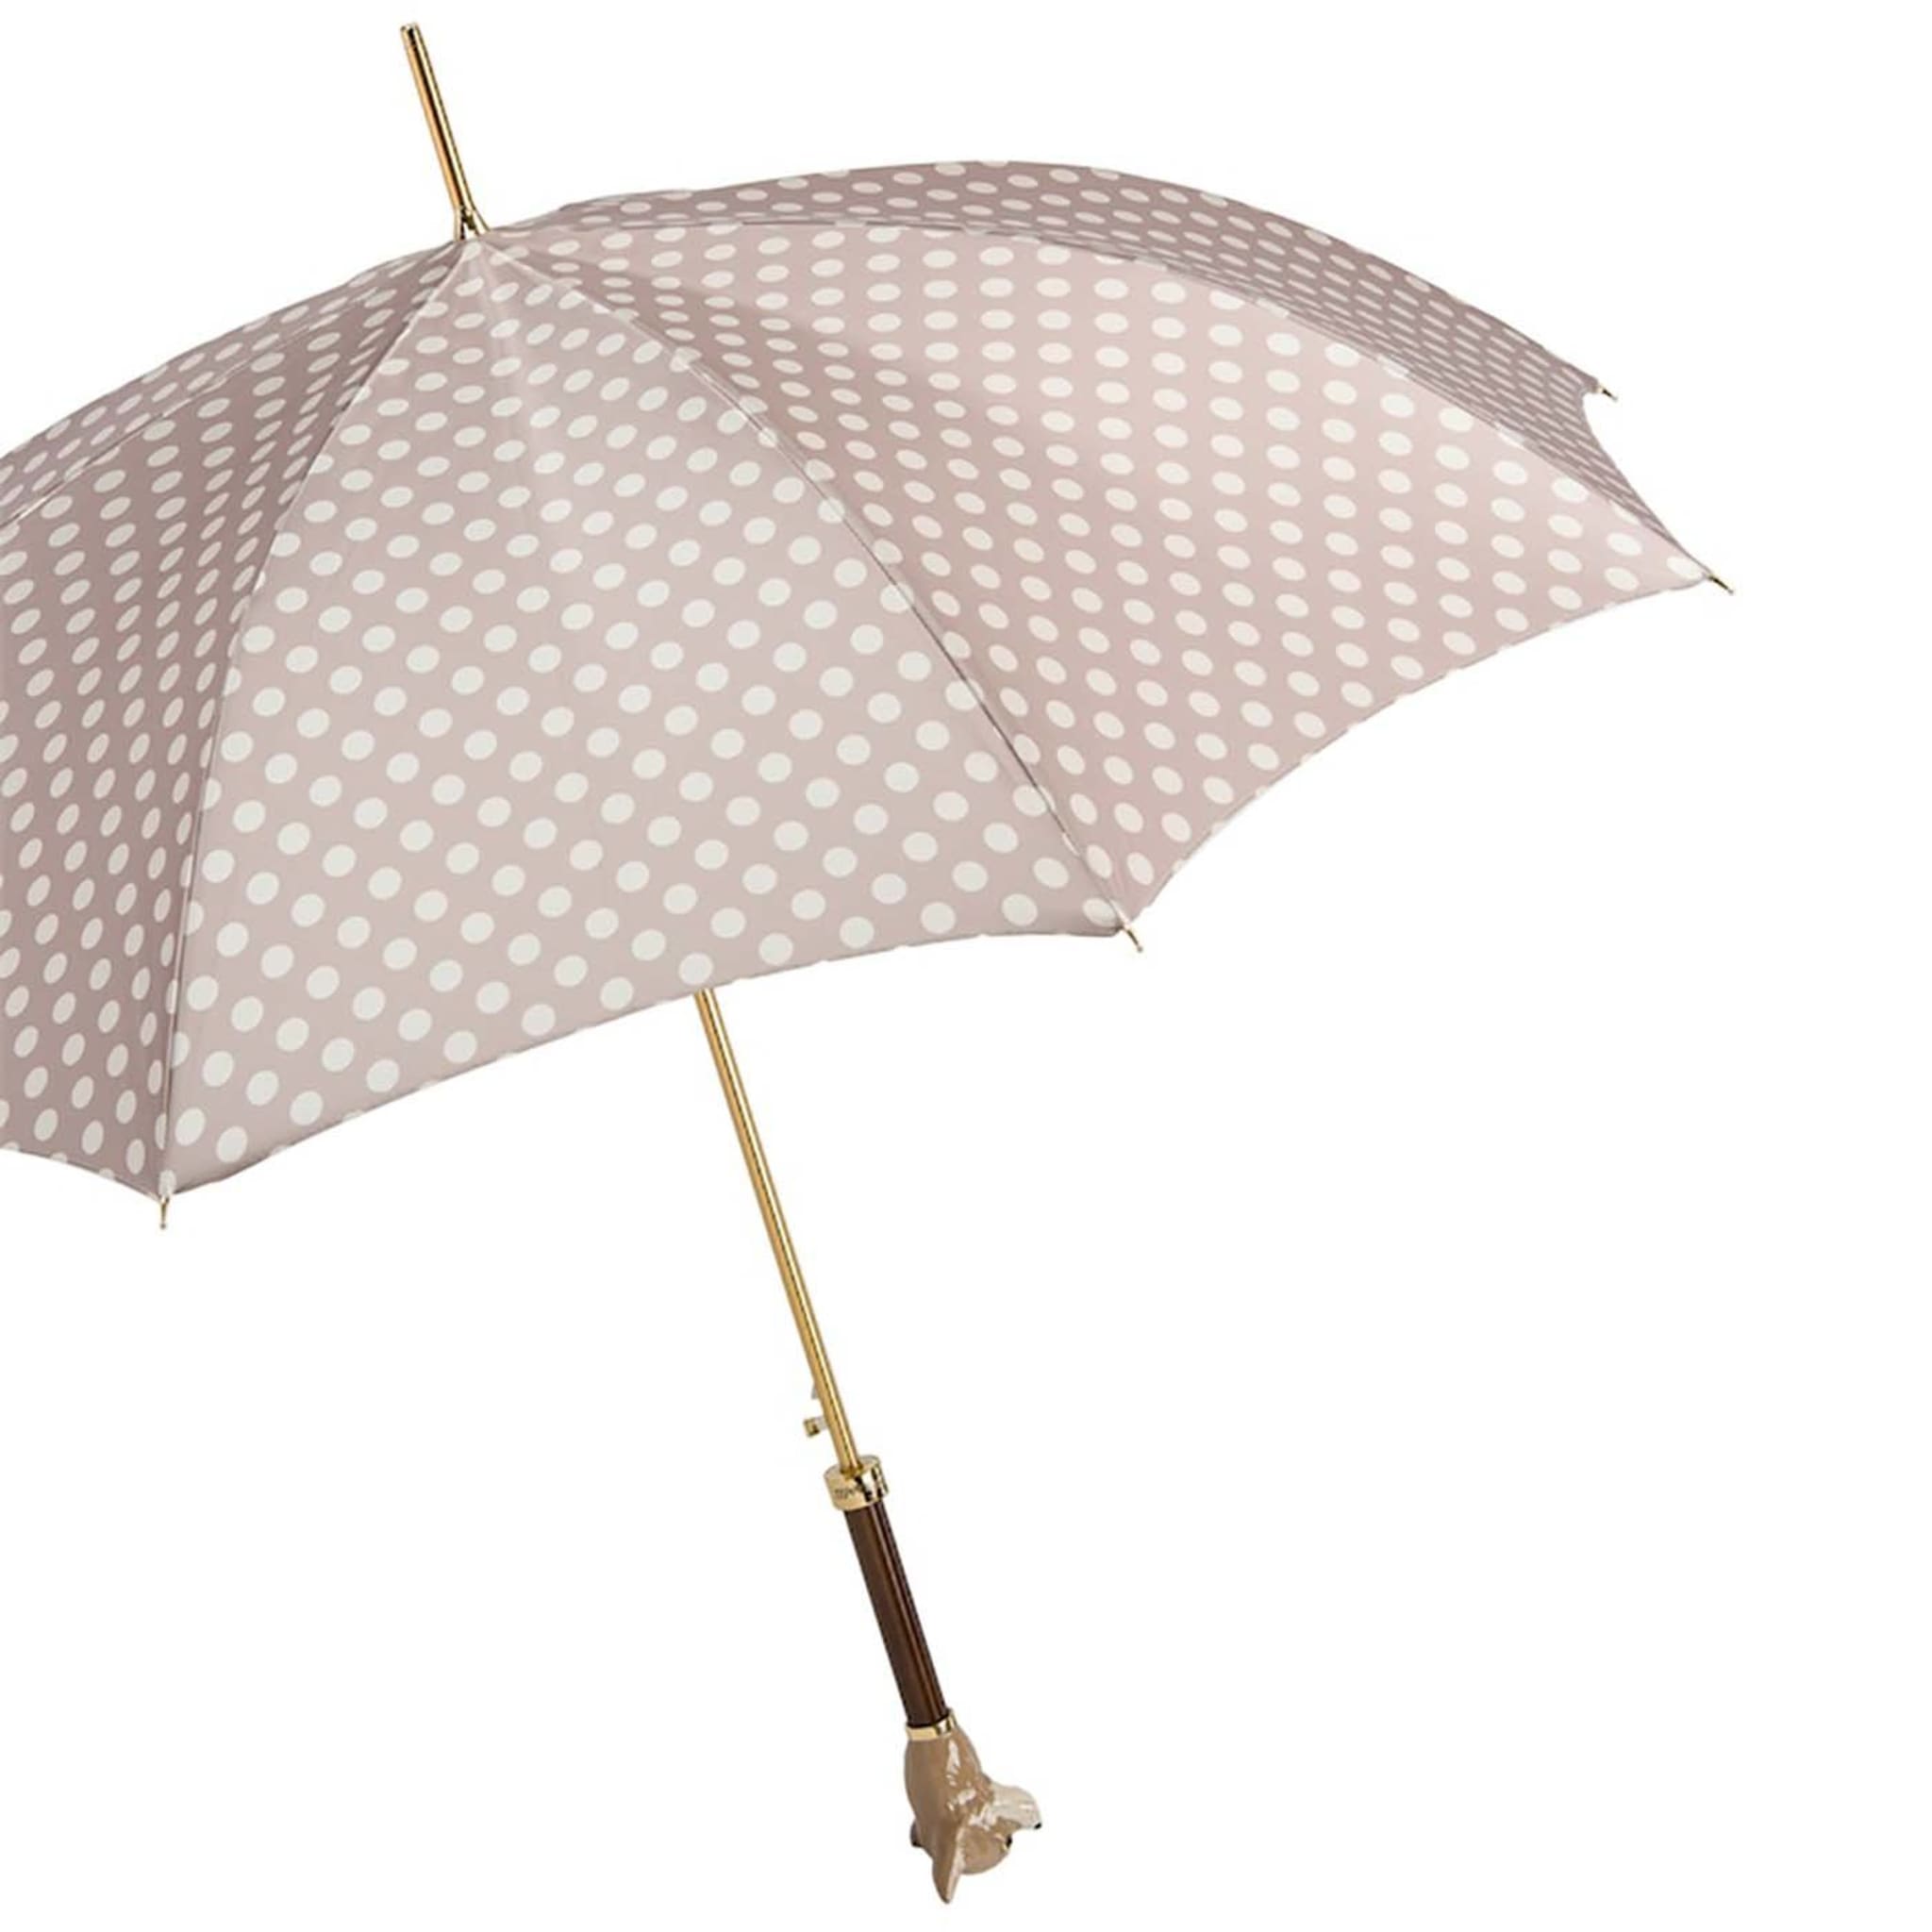 Chihuahua Umbrella with Dots - Alternative view 5